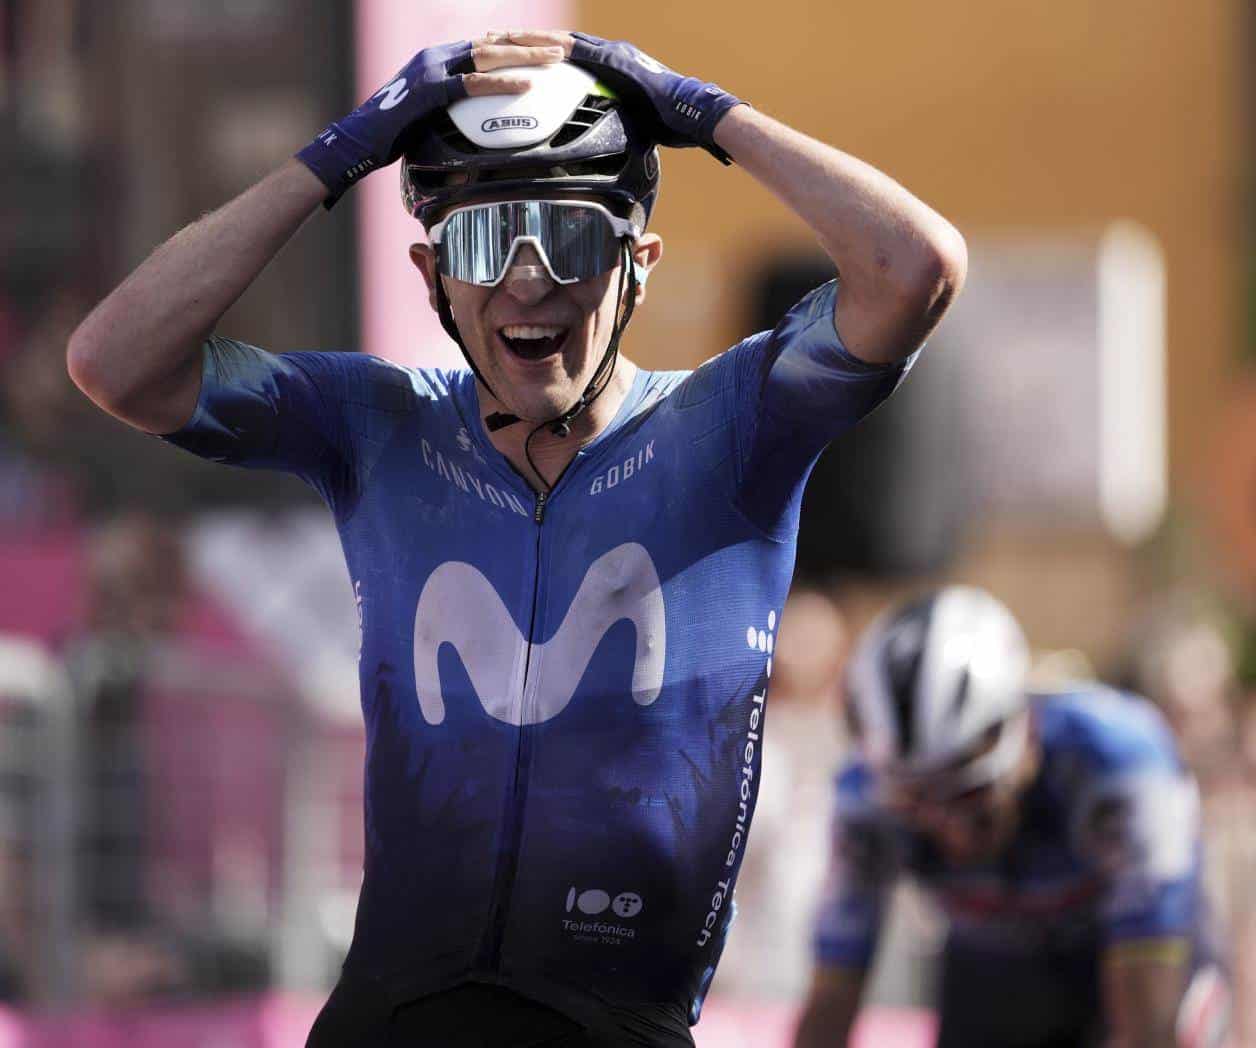 Giro: Pelayo Sánchez gana la sexta etapa